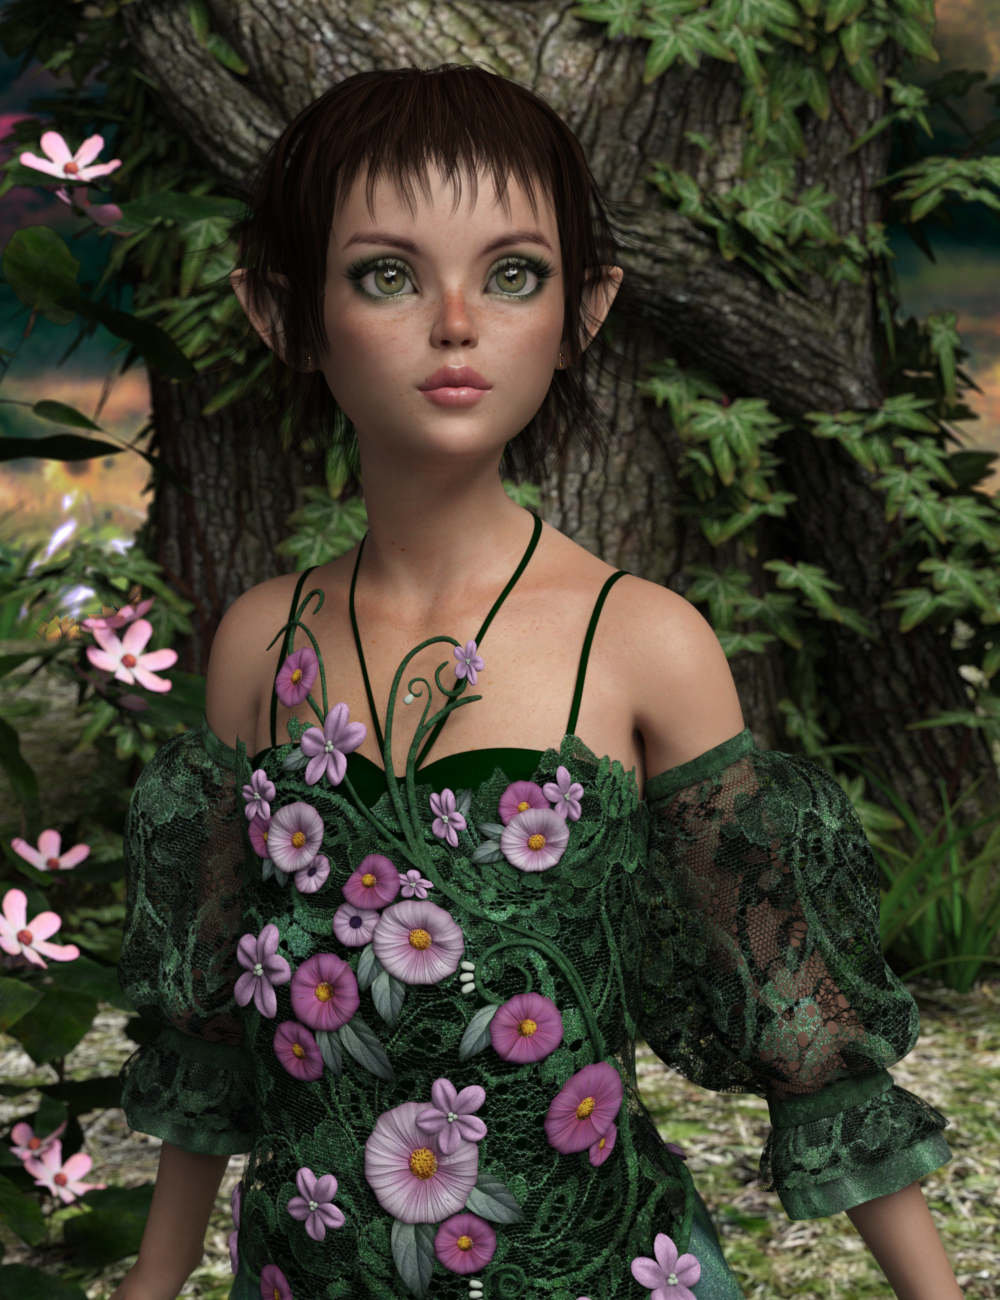 P3D The Girl 8 Enhanced Morphs Pack by: P3Design, 3D Models by Daz 3D